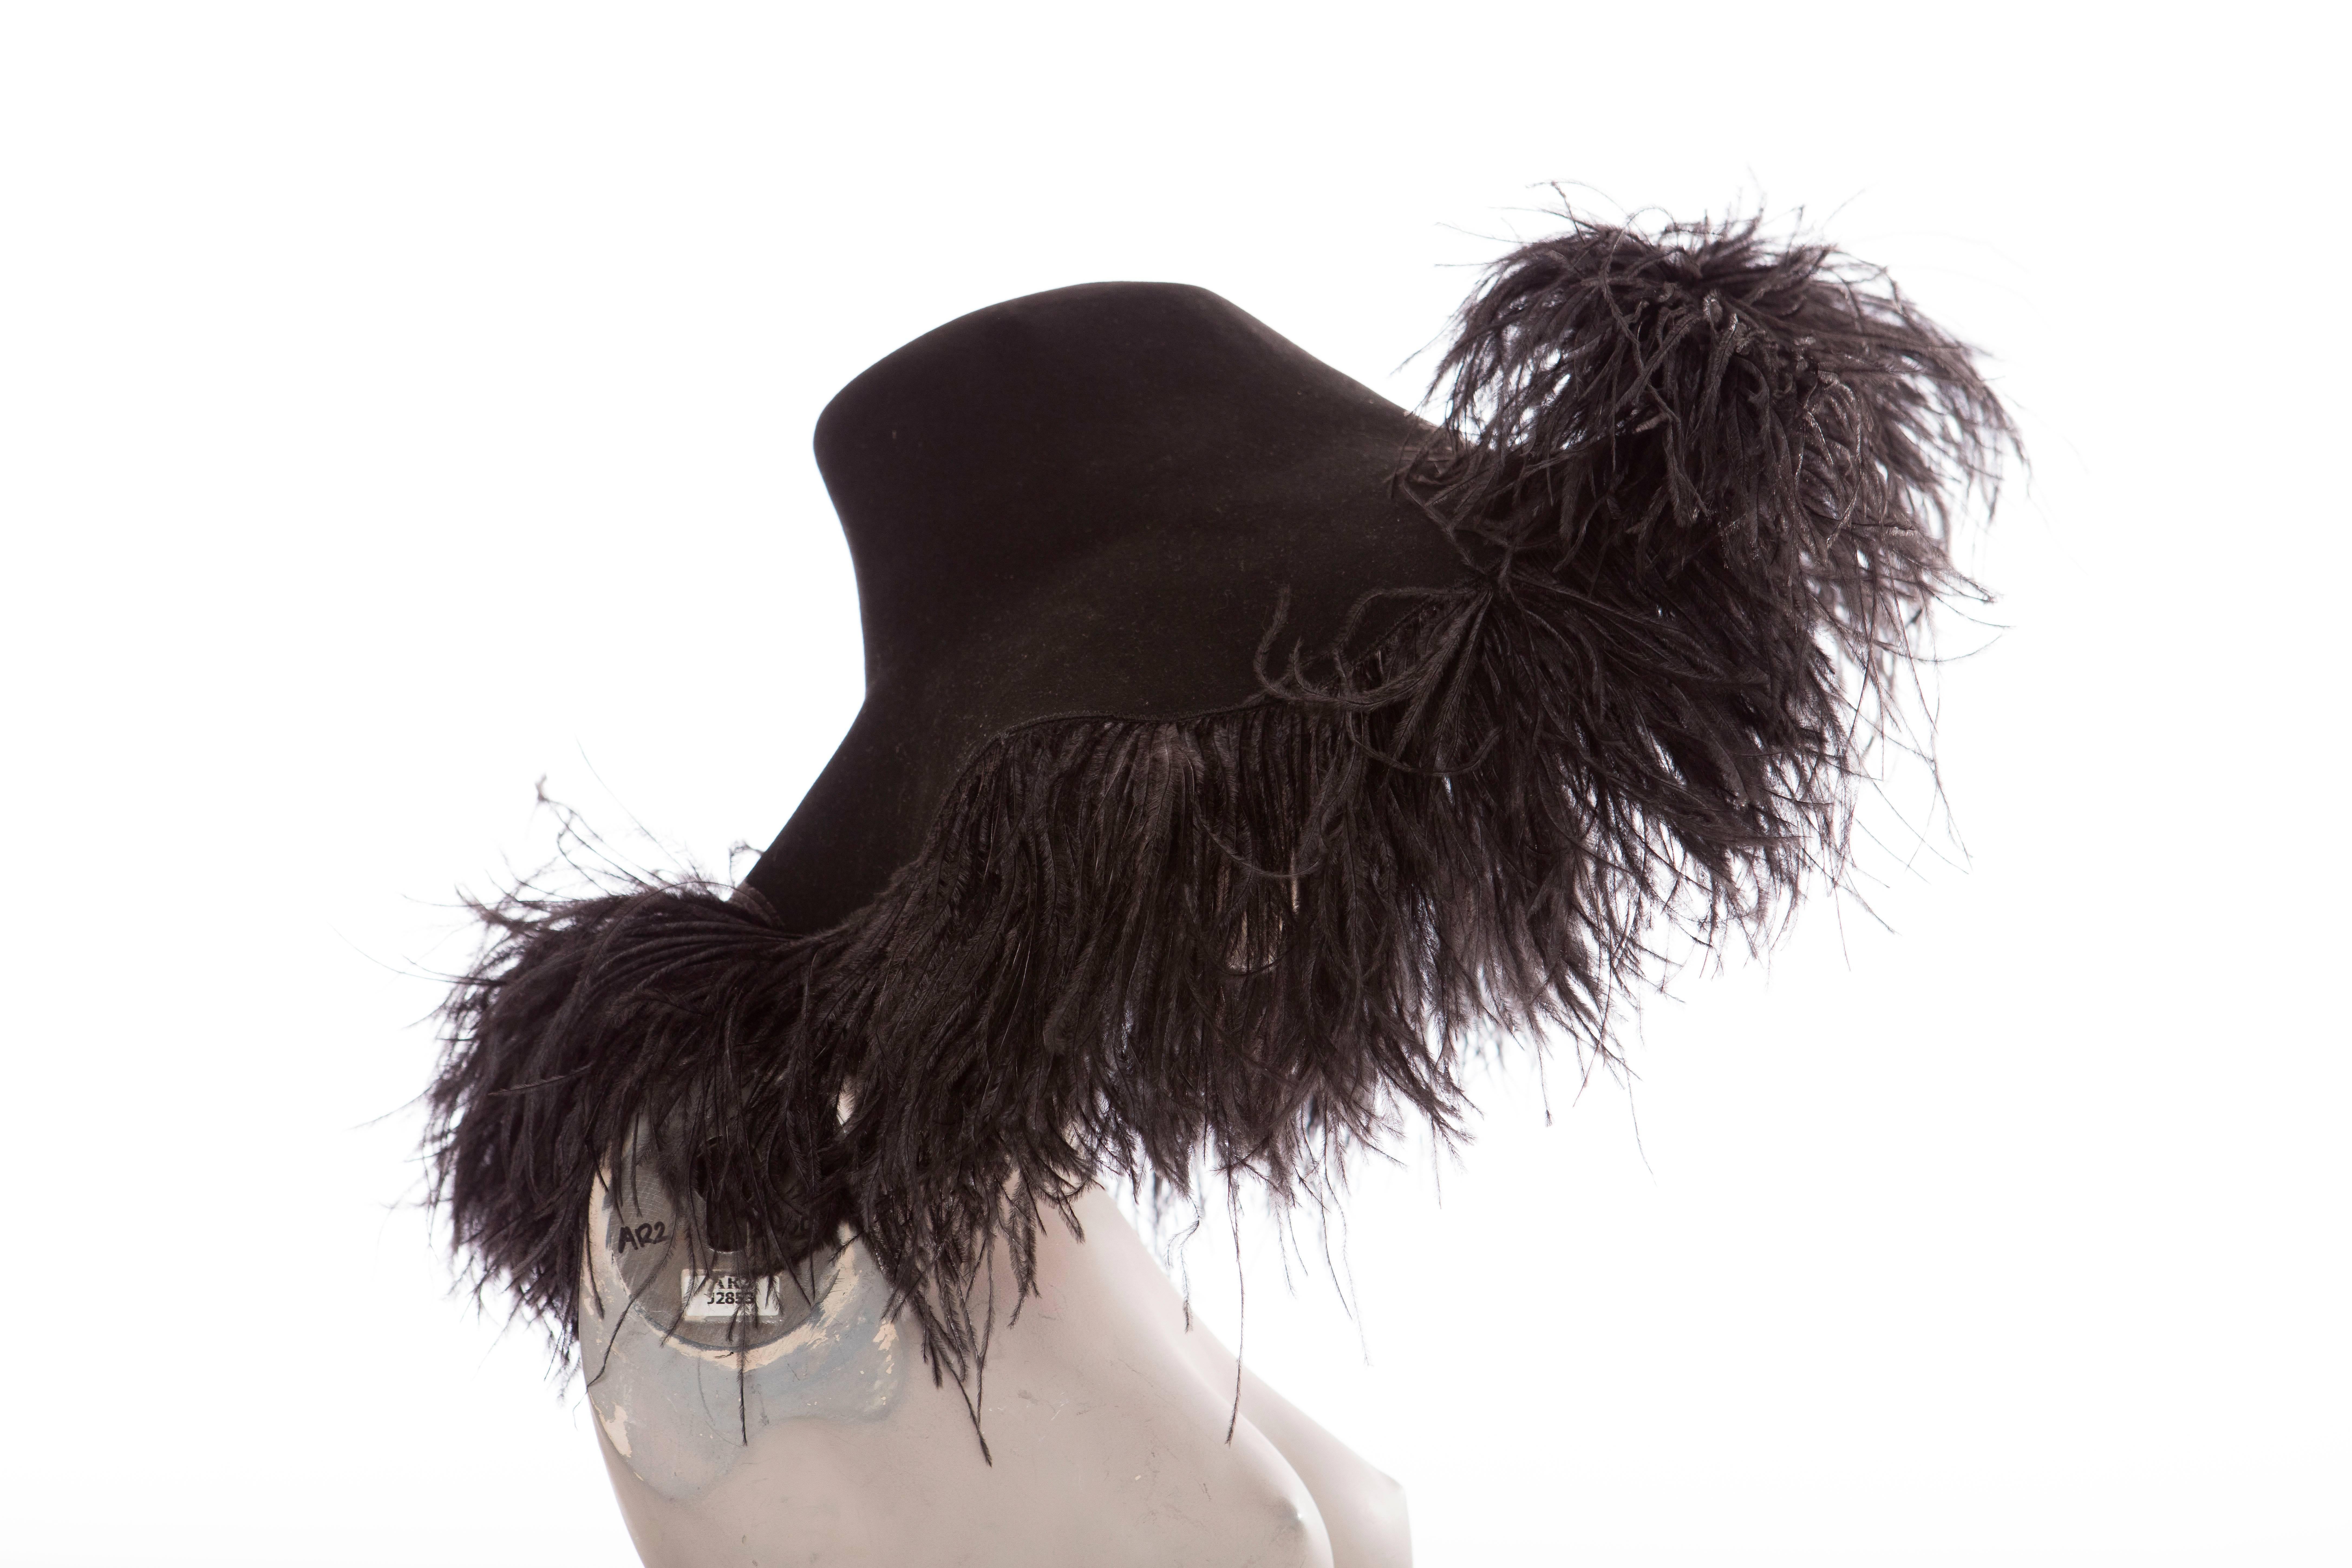 Alber Elbaz for Lanvin, Fall 2004 runway black wool felt hat with ostrich feather trim.

Circumference: 40, Brim 4